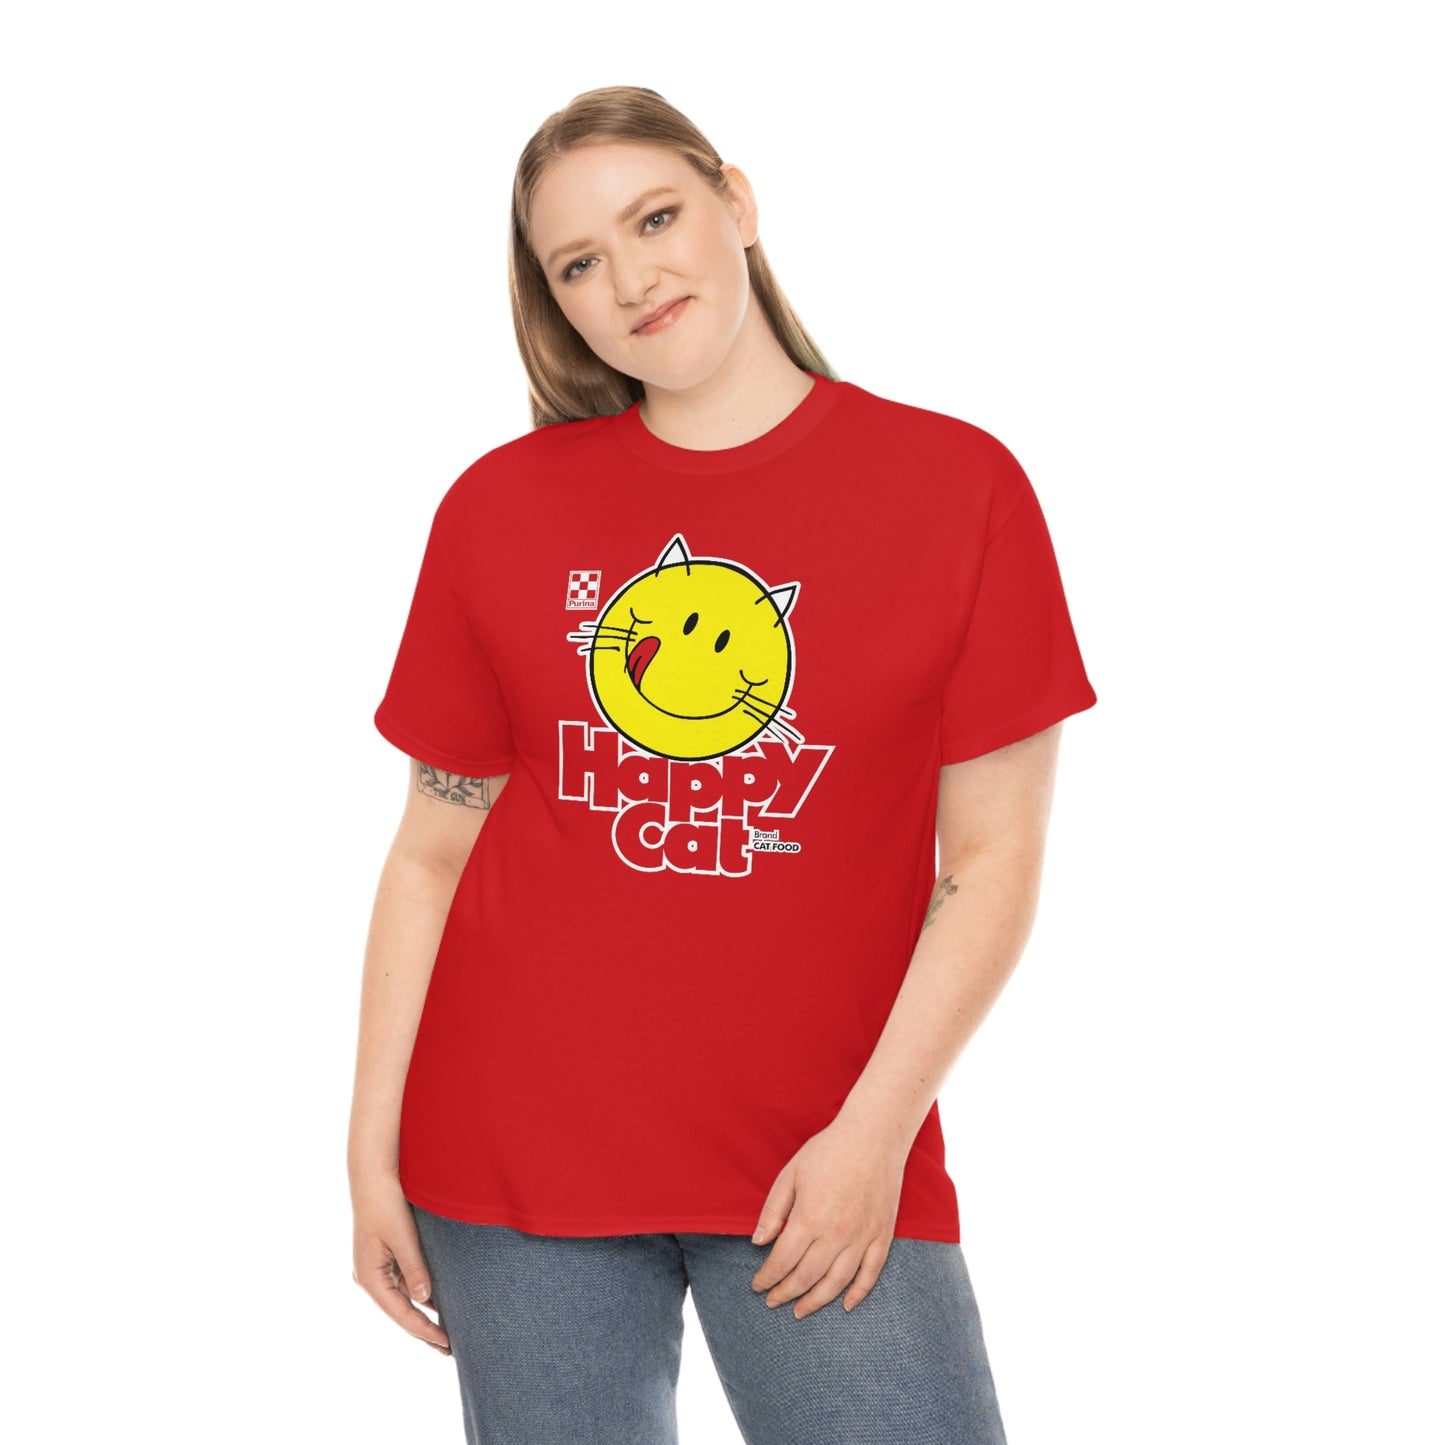 Happy Cat T-Shirt